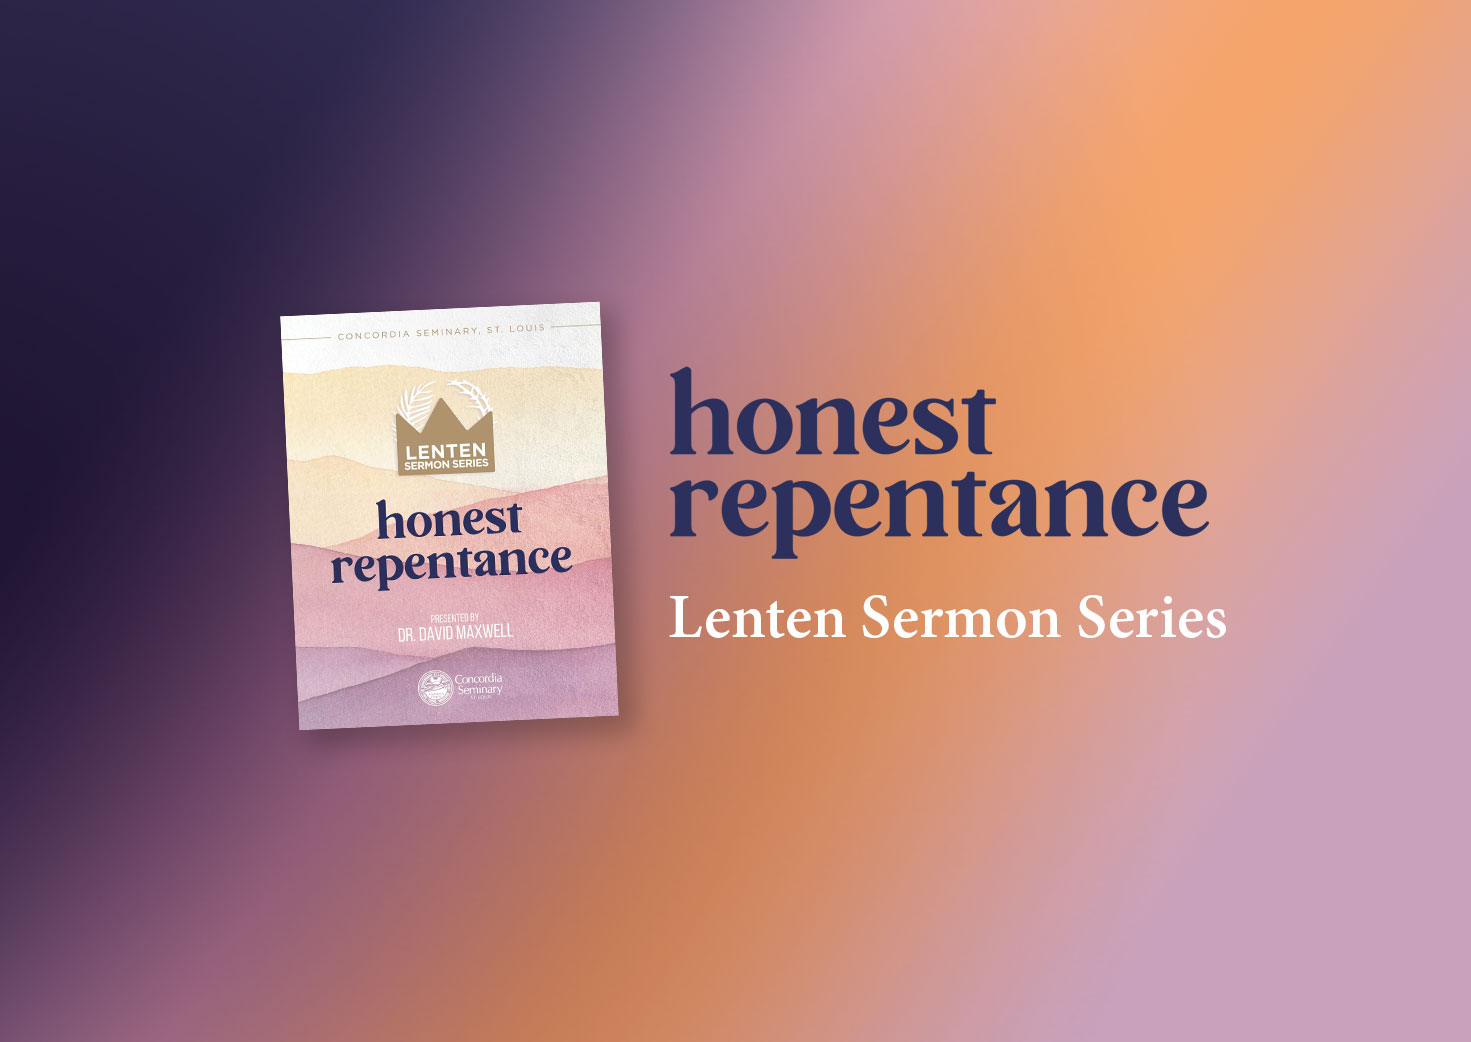 Honest Repentance – Lenten Sermon Series Introduction